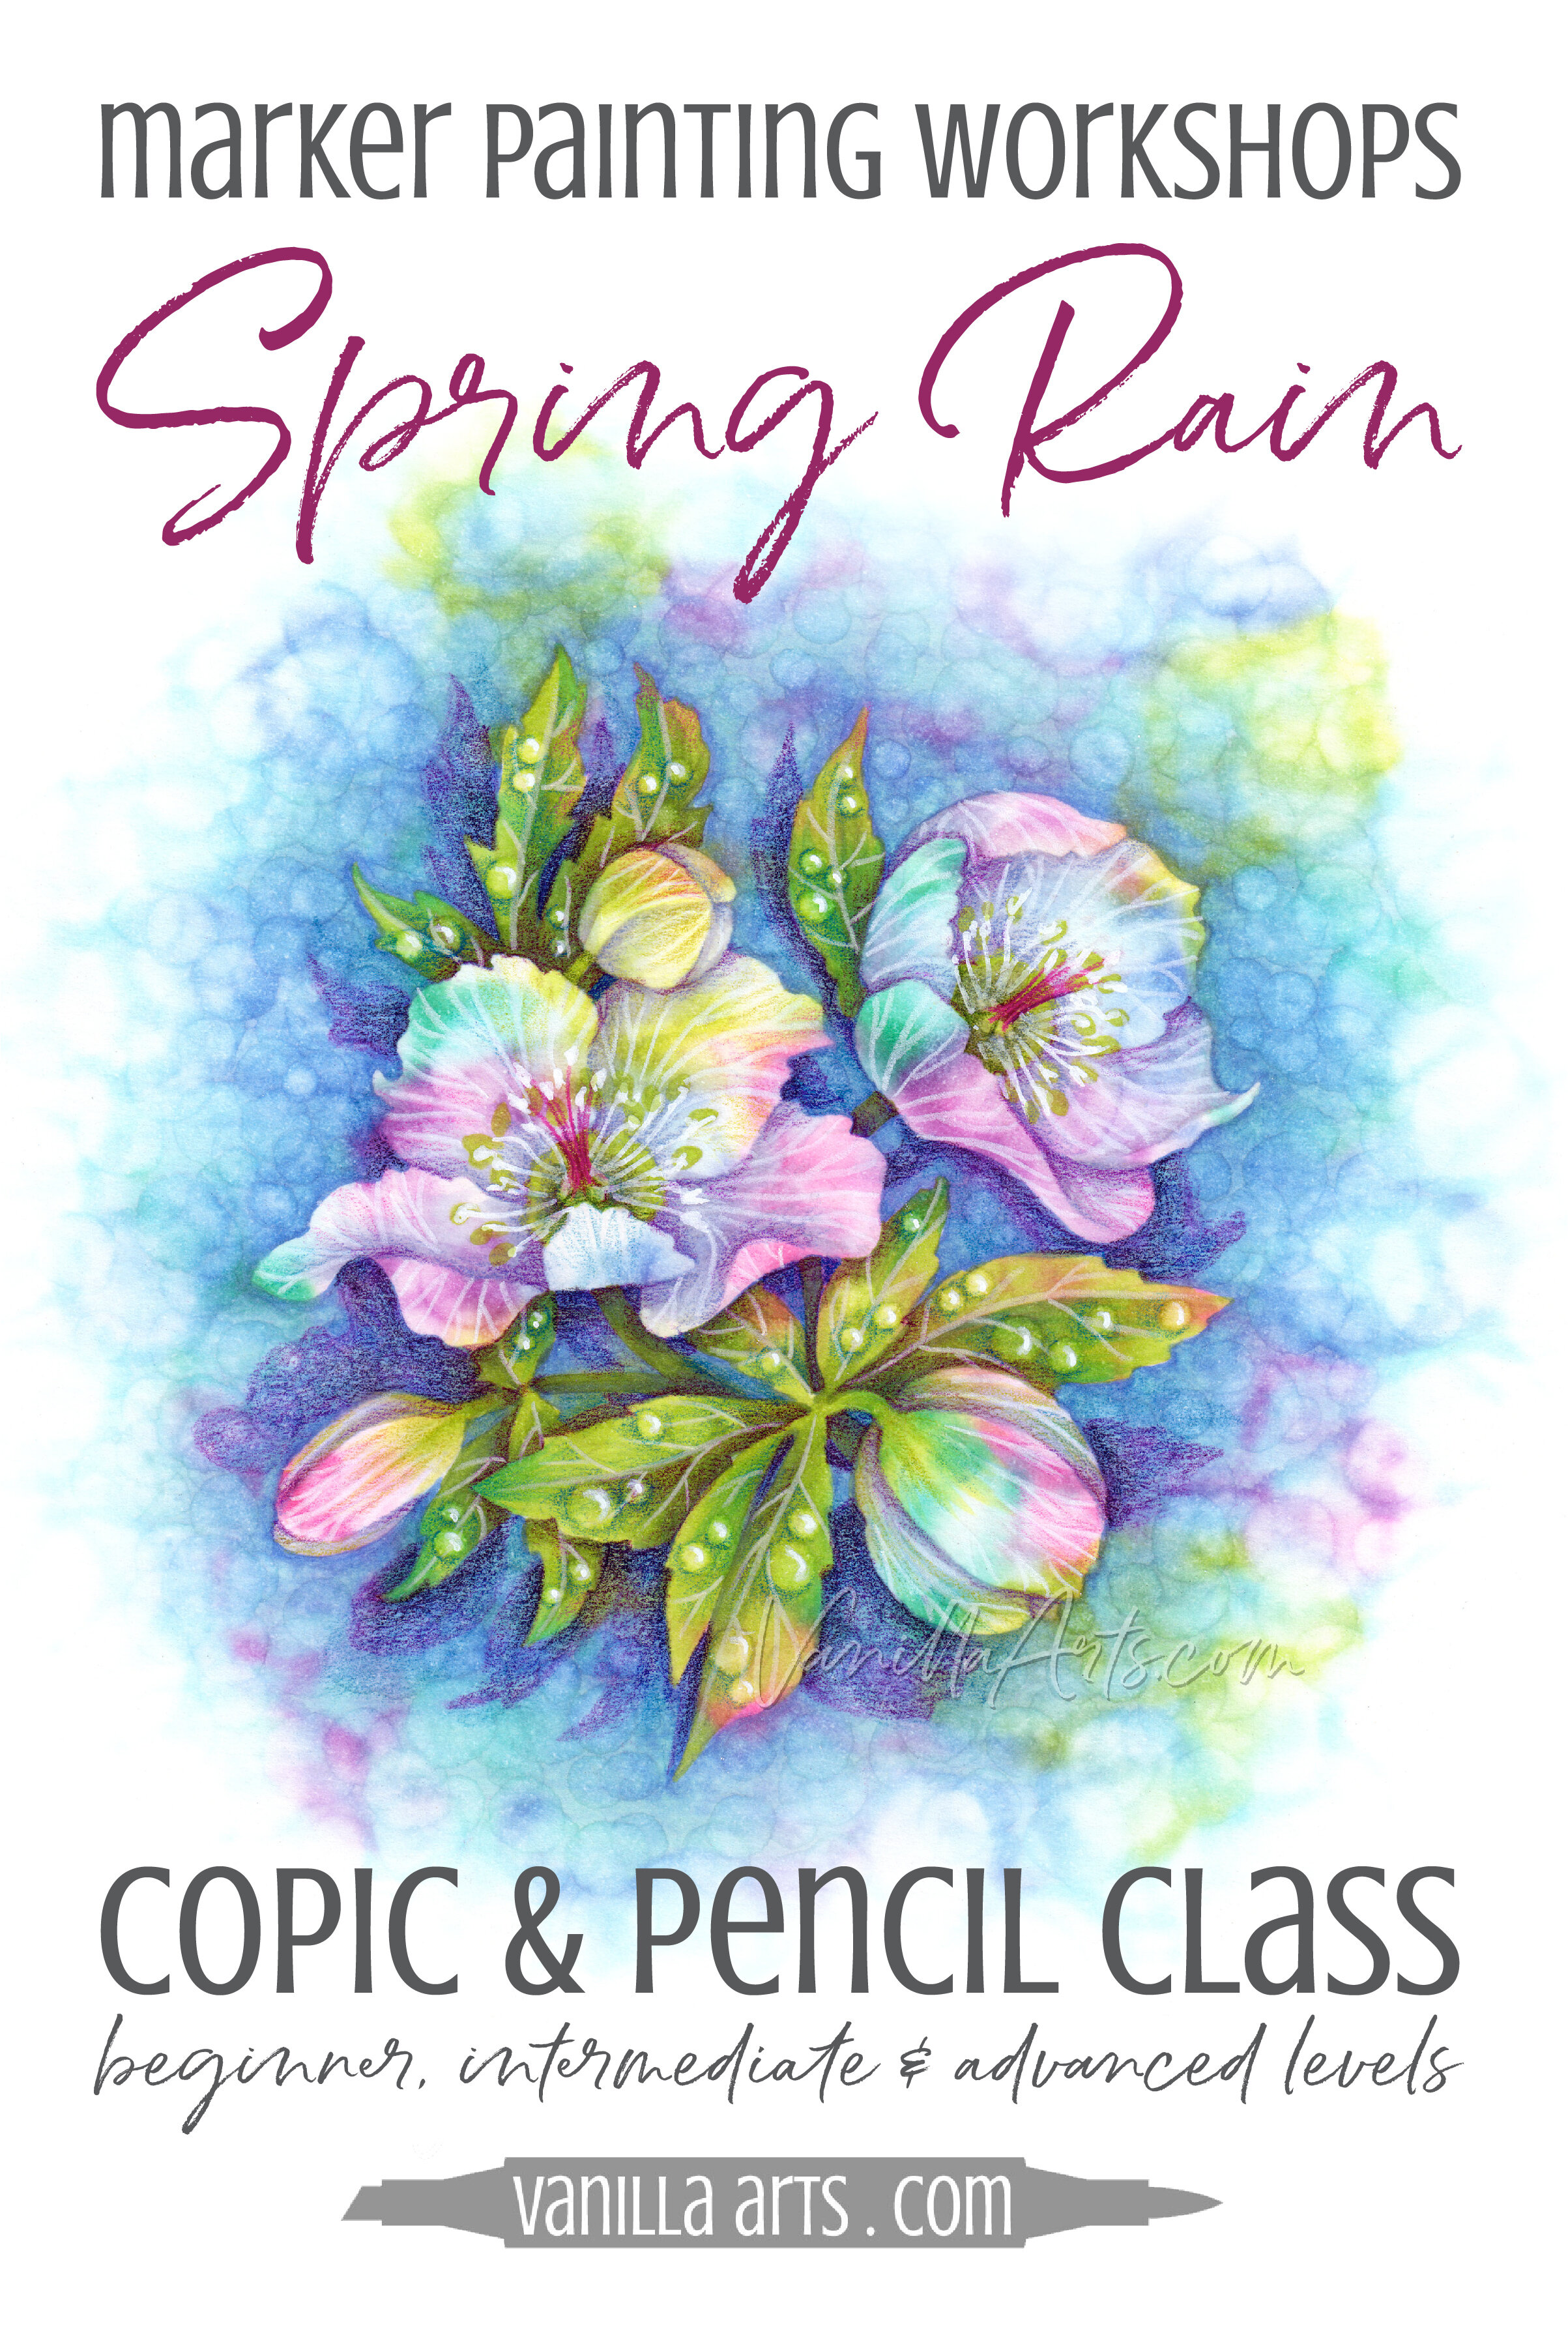 https://images.squarespace-cdn.com/content/v1/54ef7abde4b0b483325a0554/1604344418243-1L6AK9SKEGYNWNBGWVRM/Spring+Rain+-+an+Advanced+Marker+Painting+course+using+Copic+markers+and+colored+pencil+%7C+VanillaArts.com+%7C+%23copic+%23coloredpencil+%23realisticcoloring